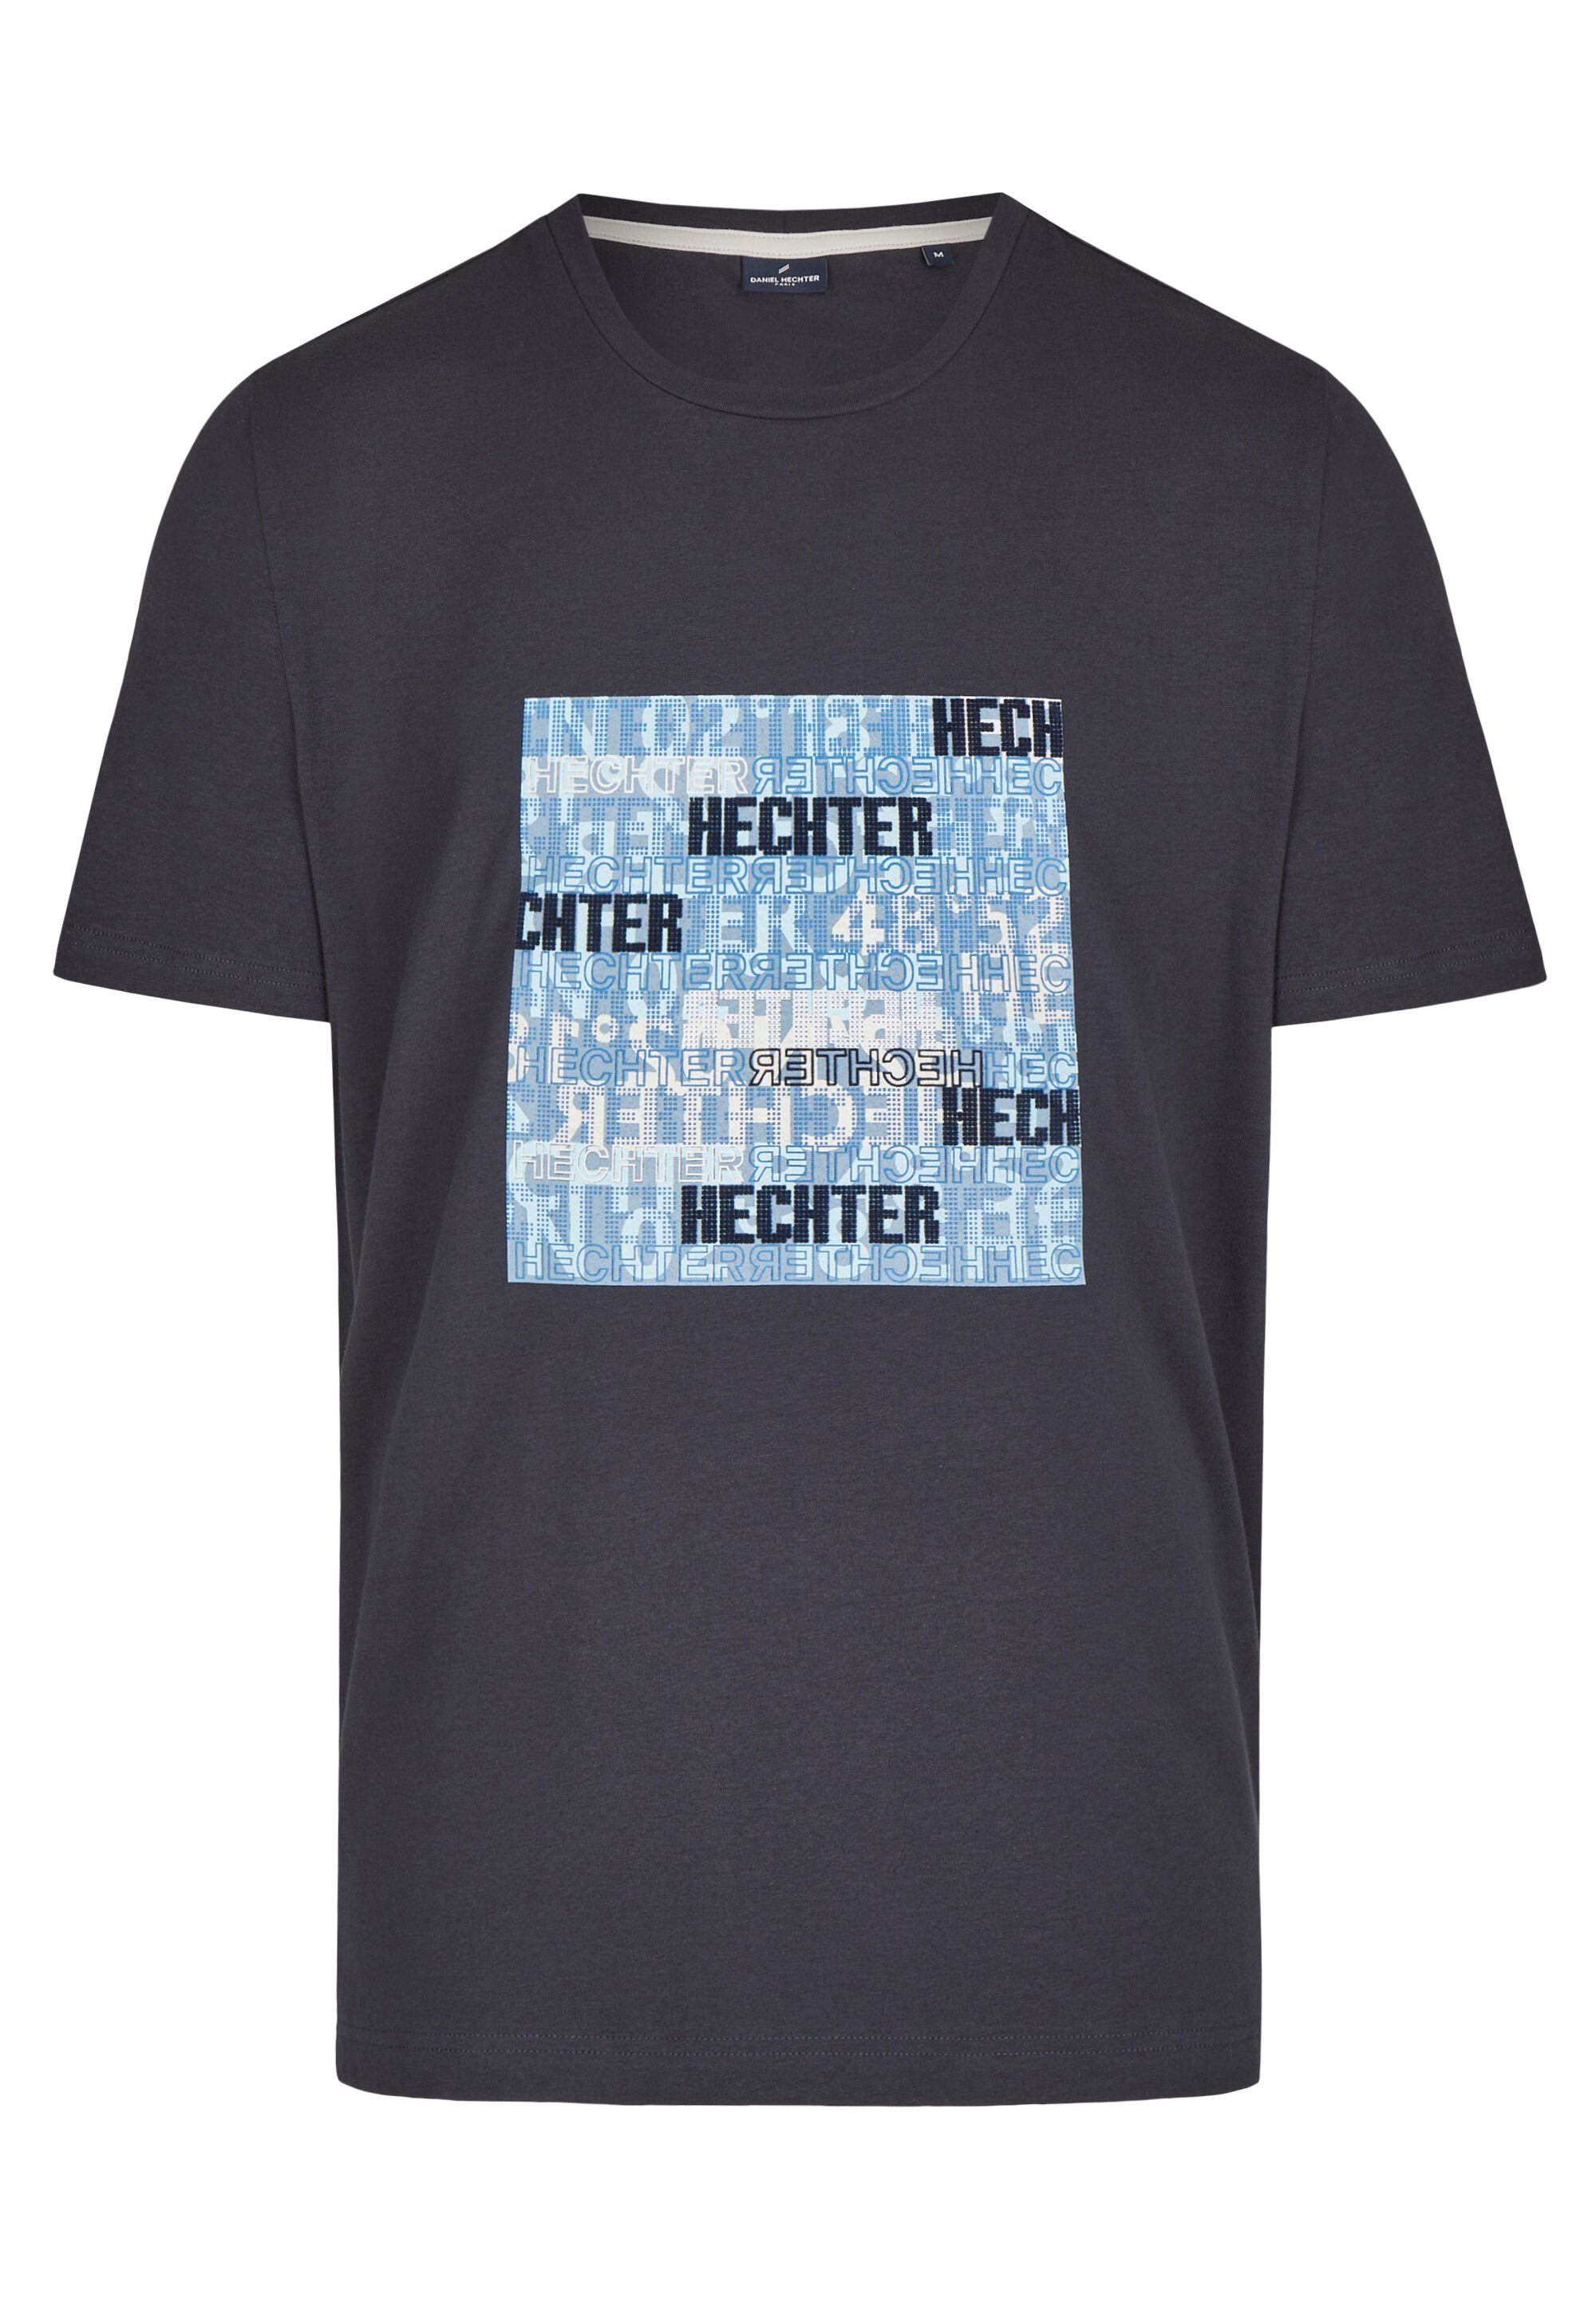 Top-Angebot HECHTER PARIS Print-Shirt DH-ECO midnight blue Front-Print